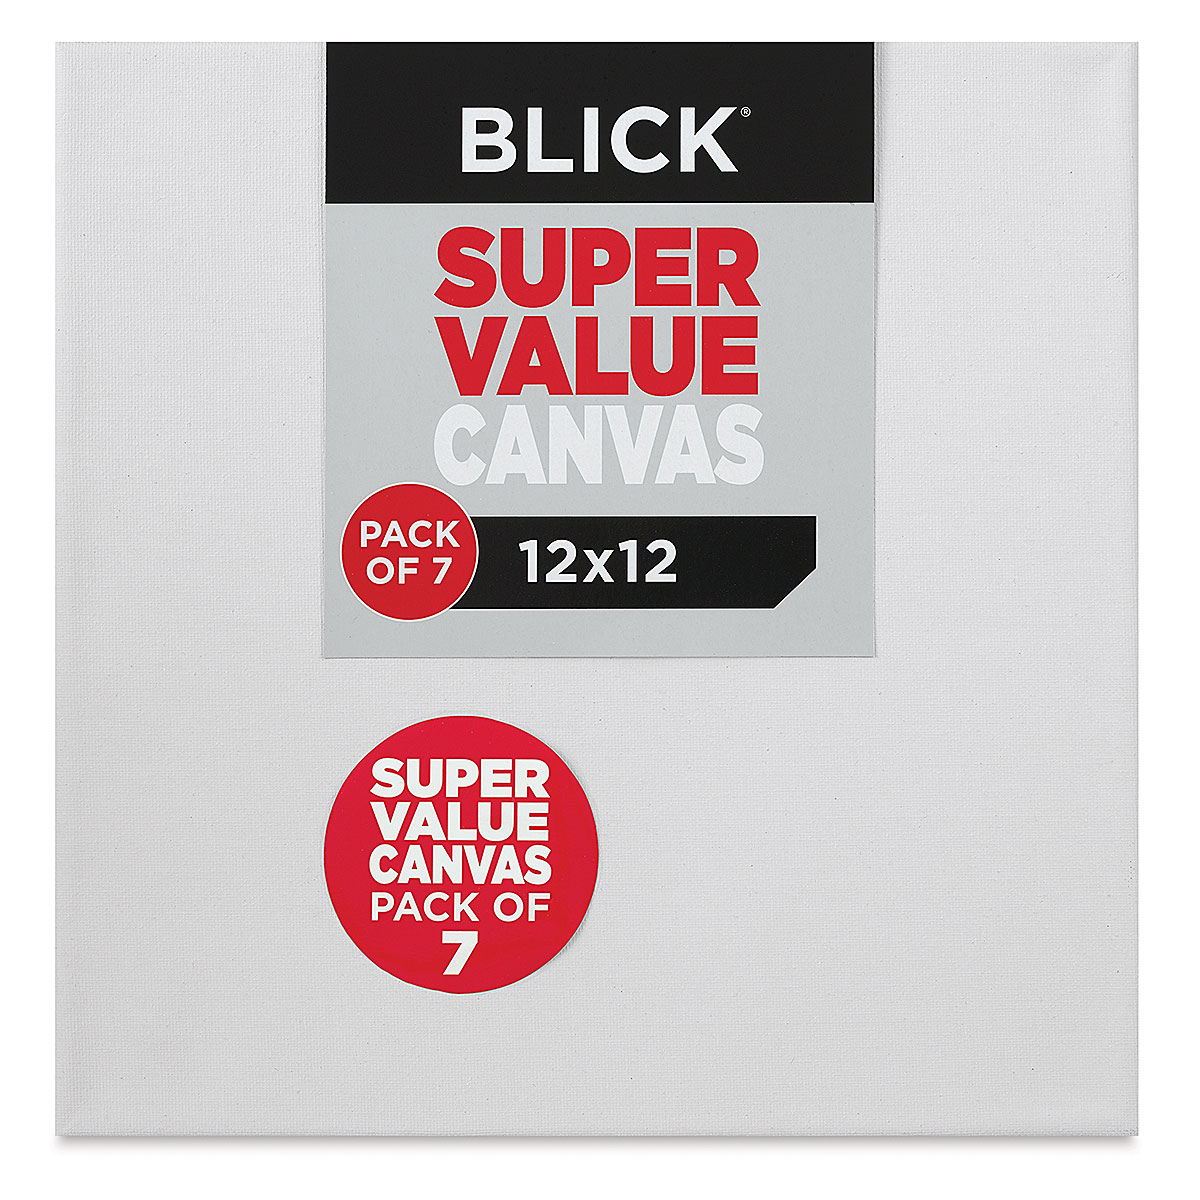 Blick Super Value Canvas Pack - 12' x 12', Pkg of 7